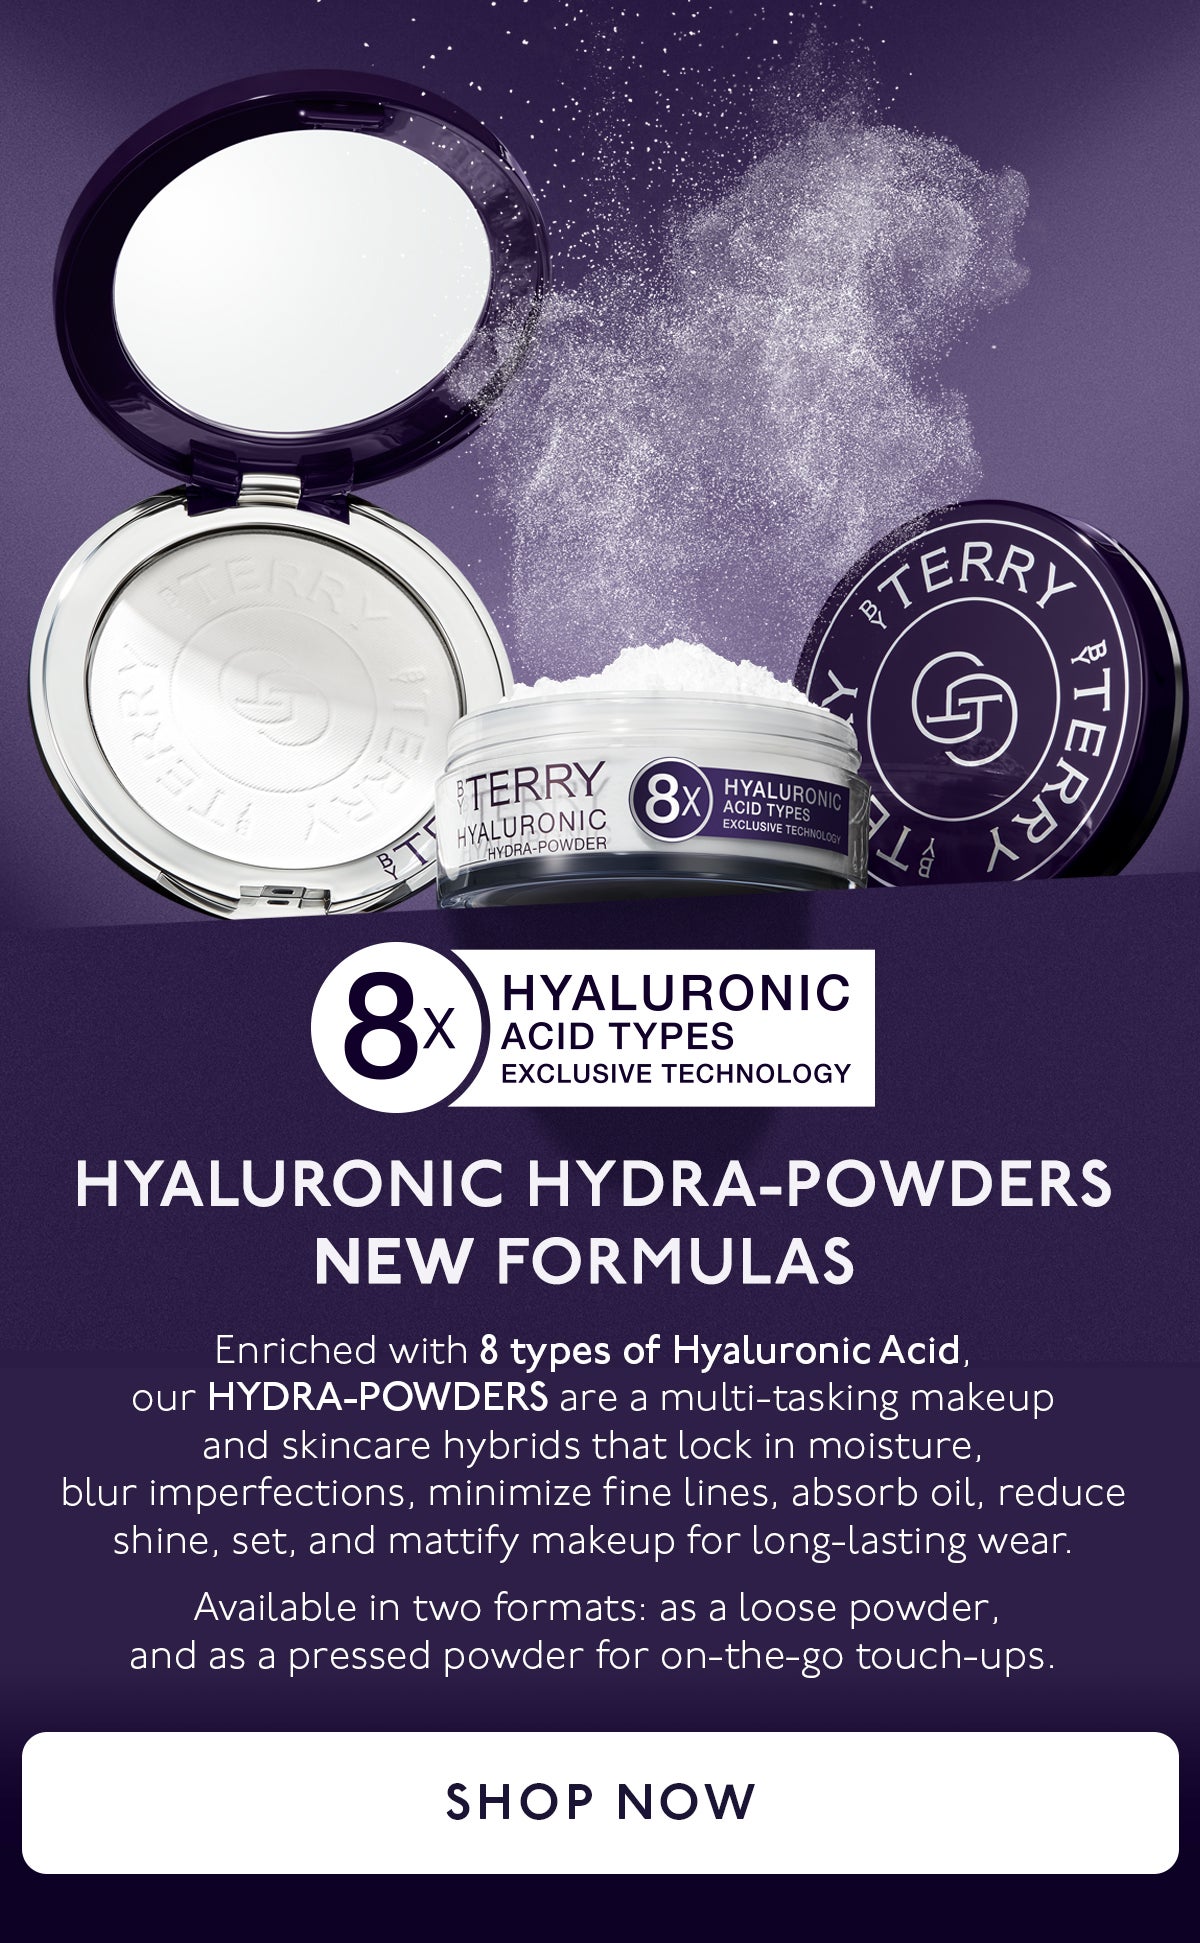 NEW Formula Hyaluronic Hydra-Powders